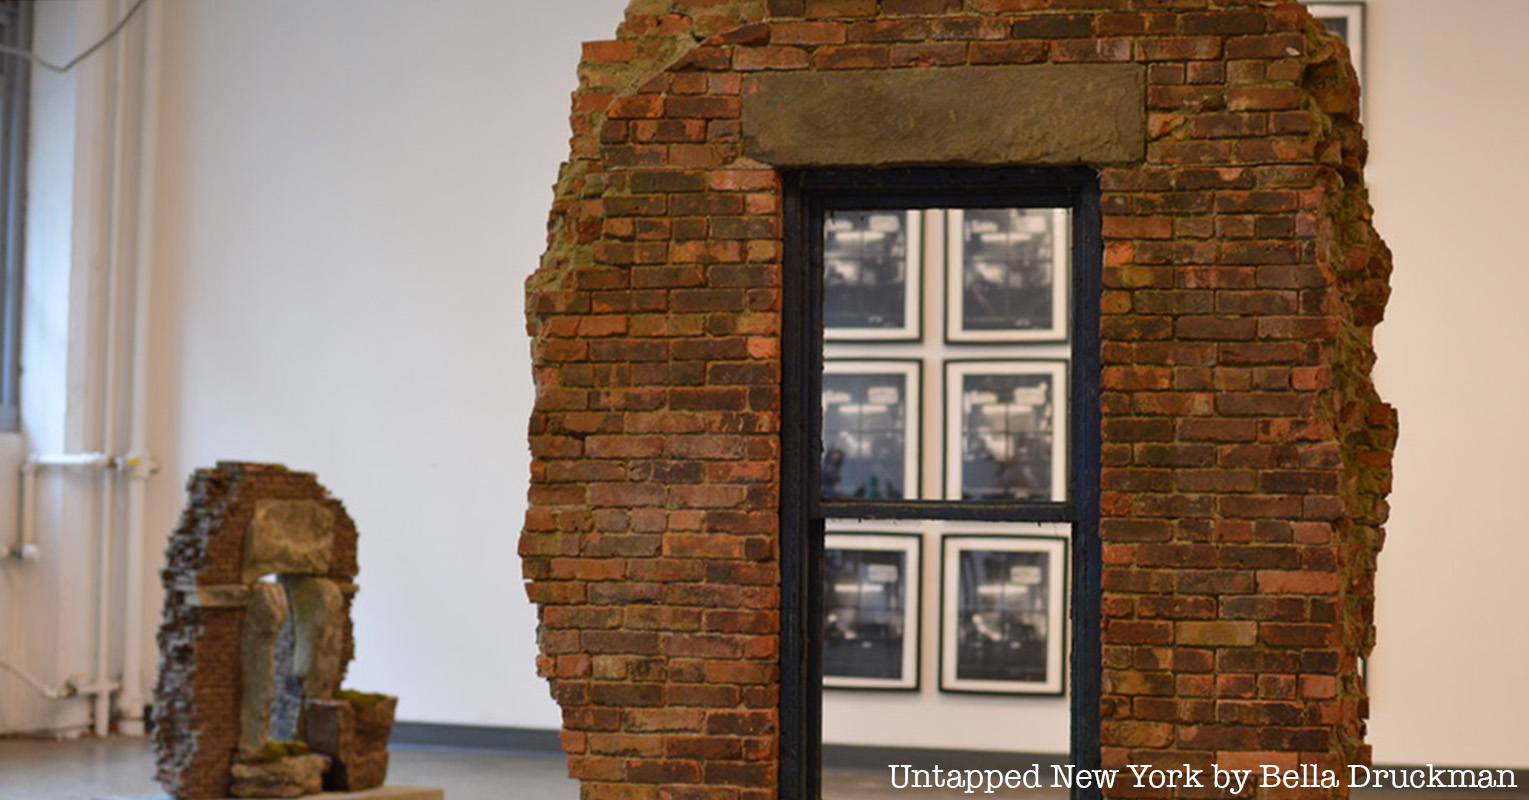 Masao Gozu "Windows to New York" display.